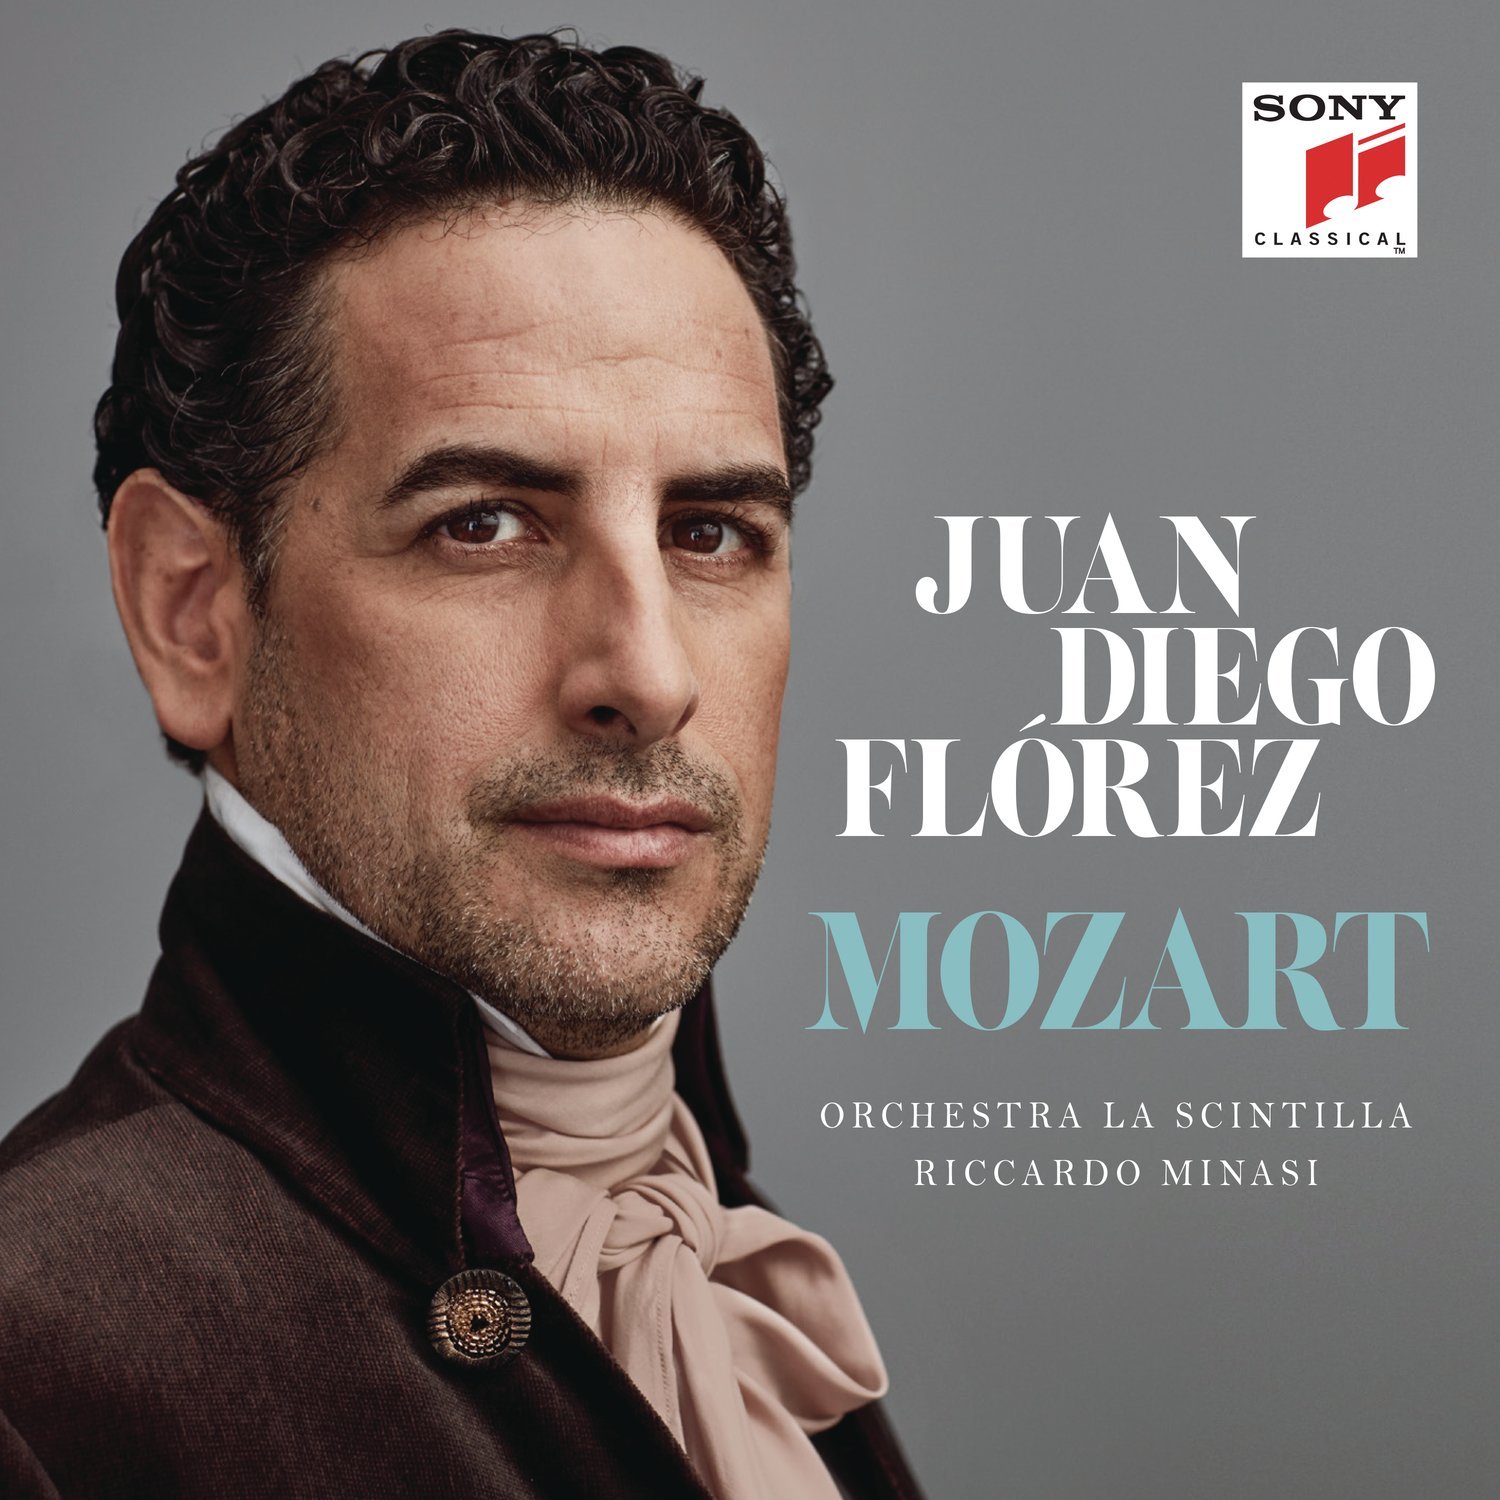 Star tenor Juan Diego Flórez releases his first album of Mozart arias